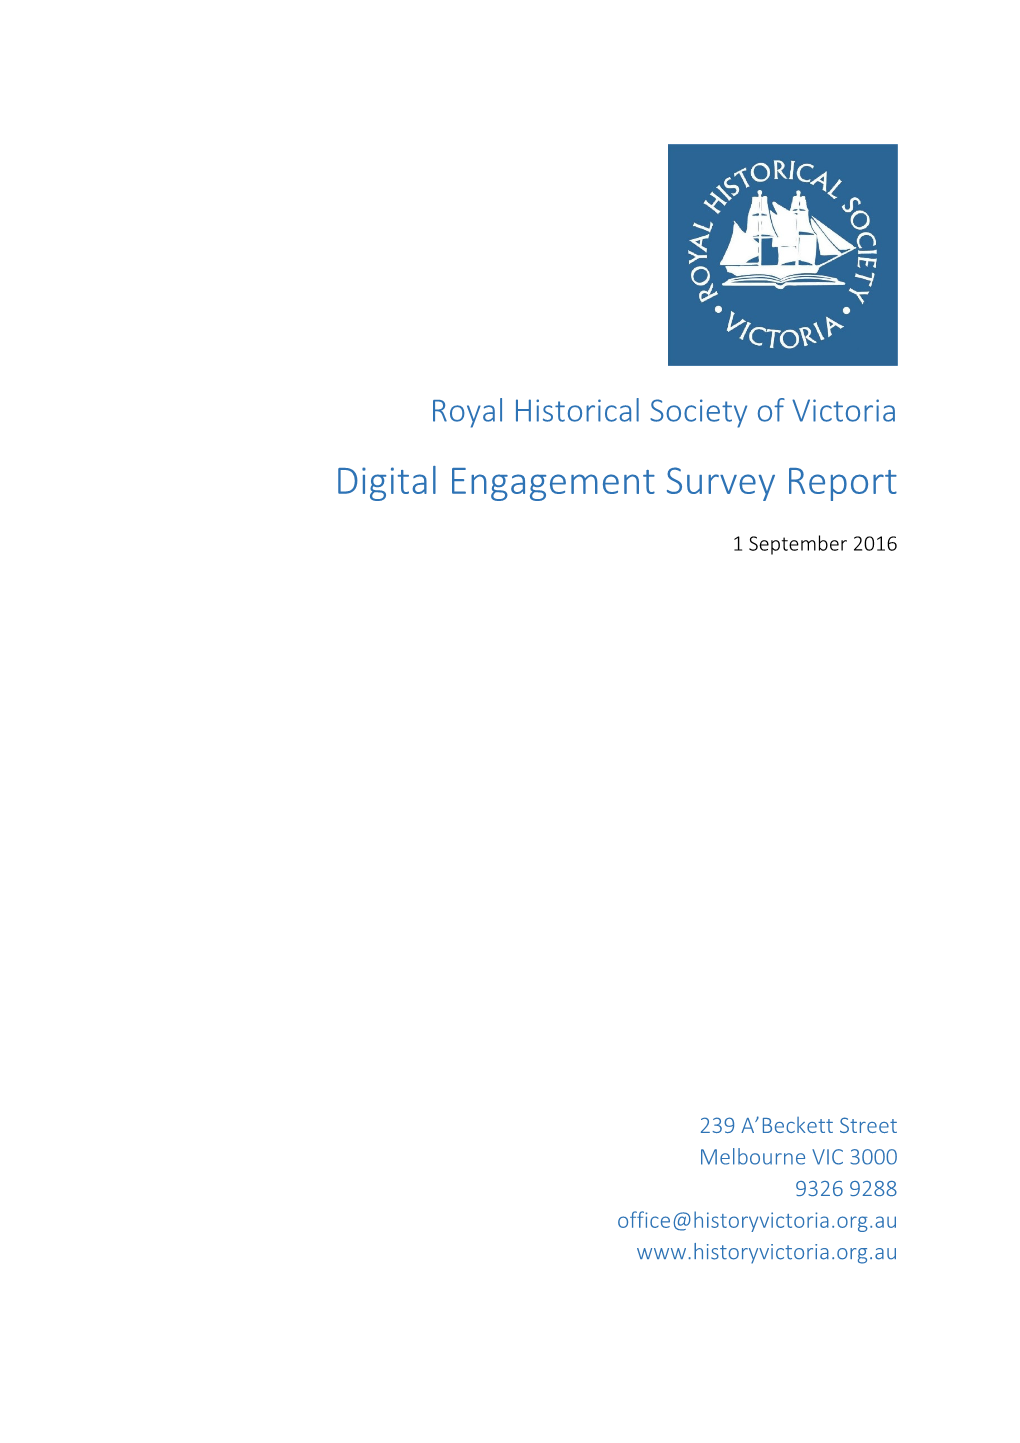 RHSV Digital Engagement Survey Report 2016 B